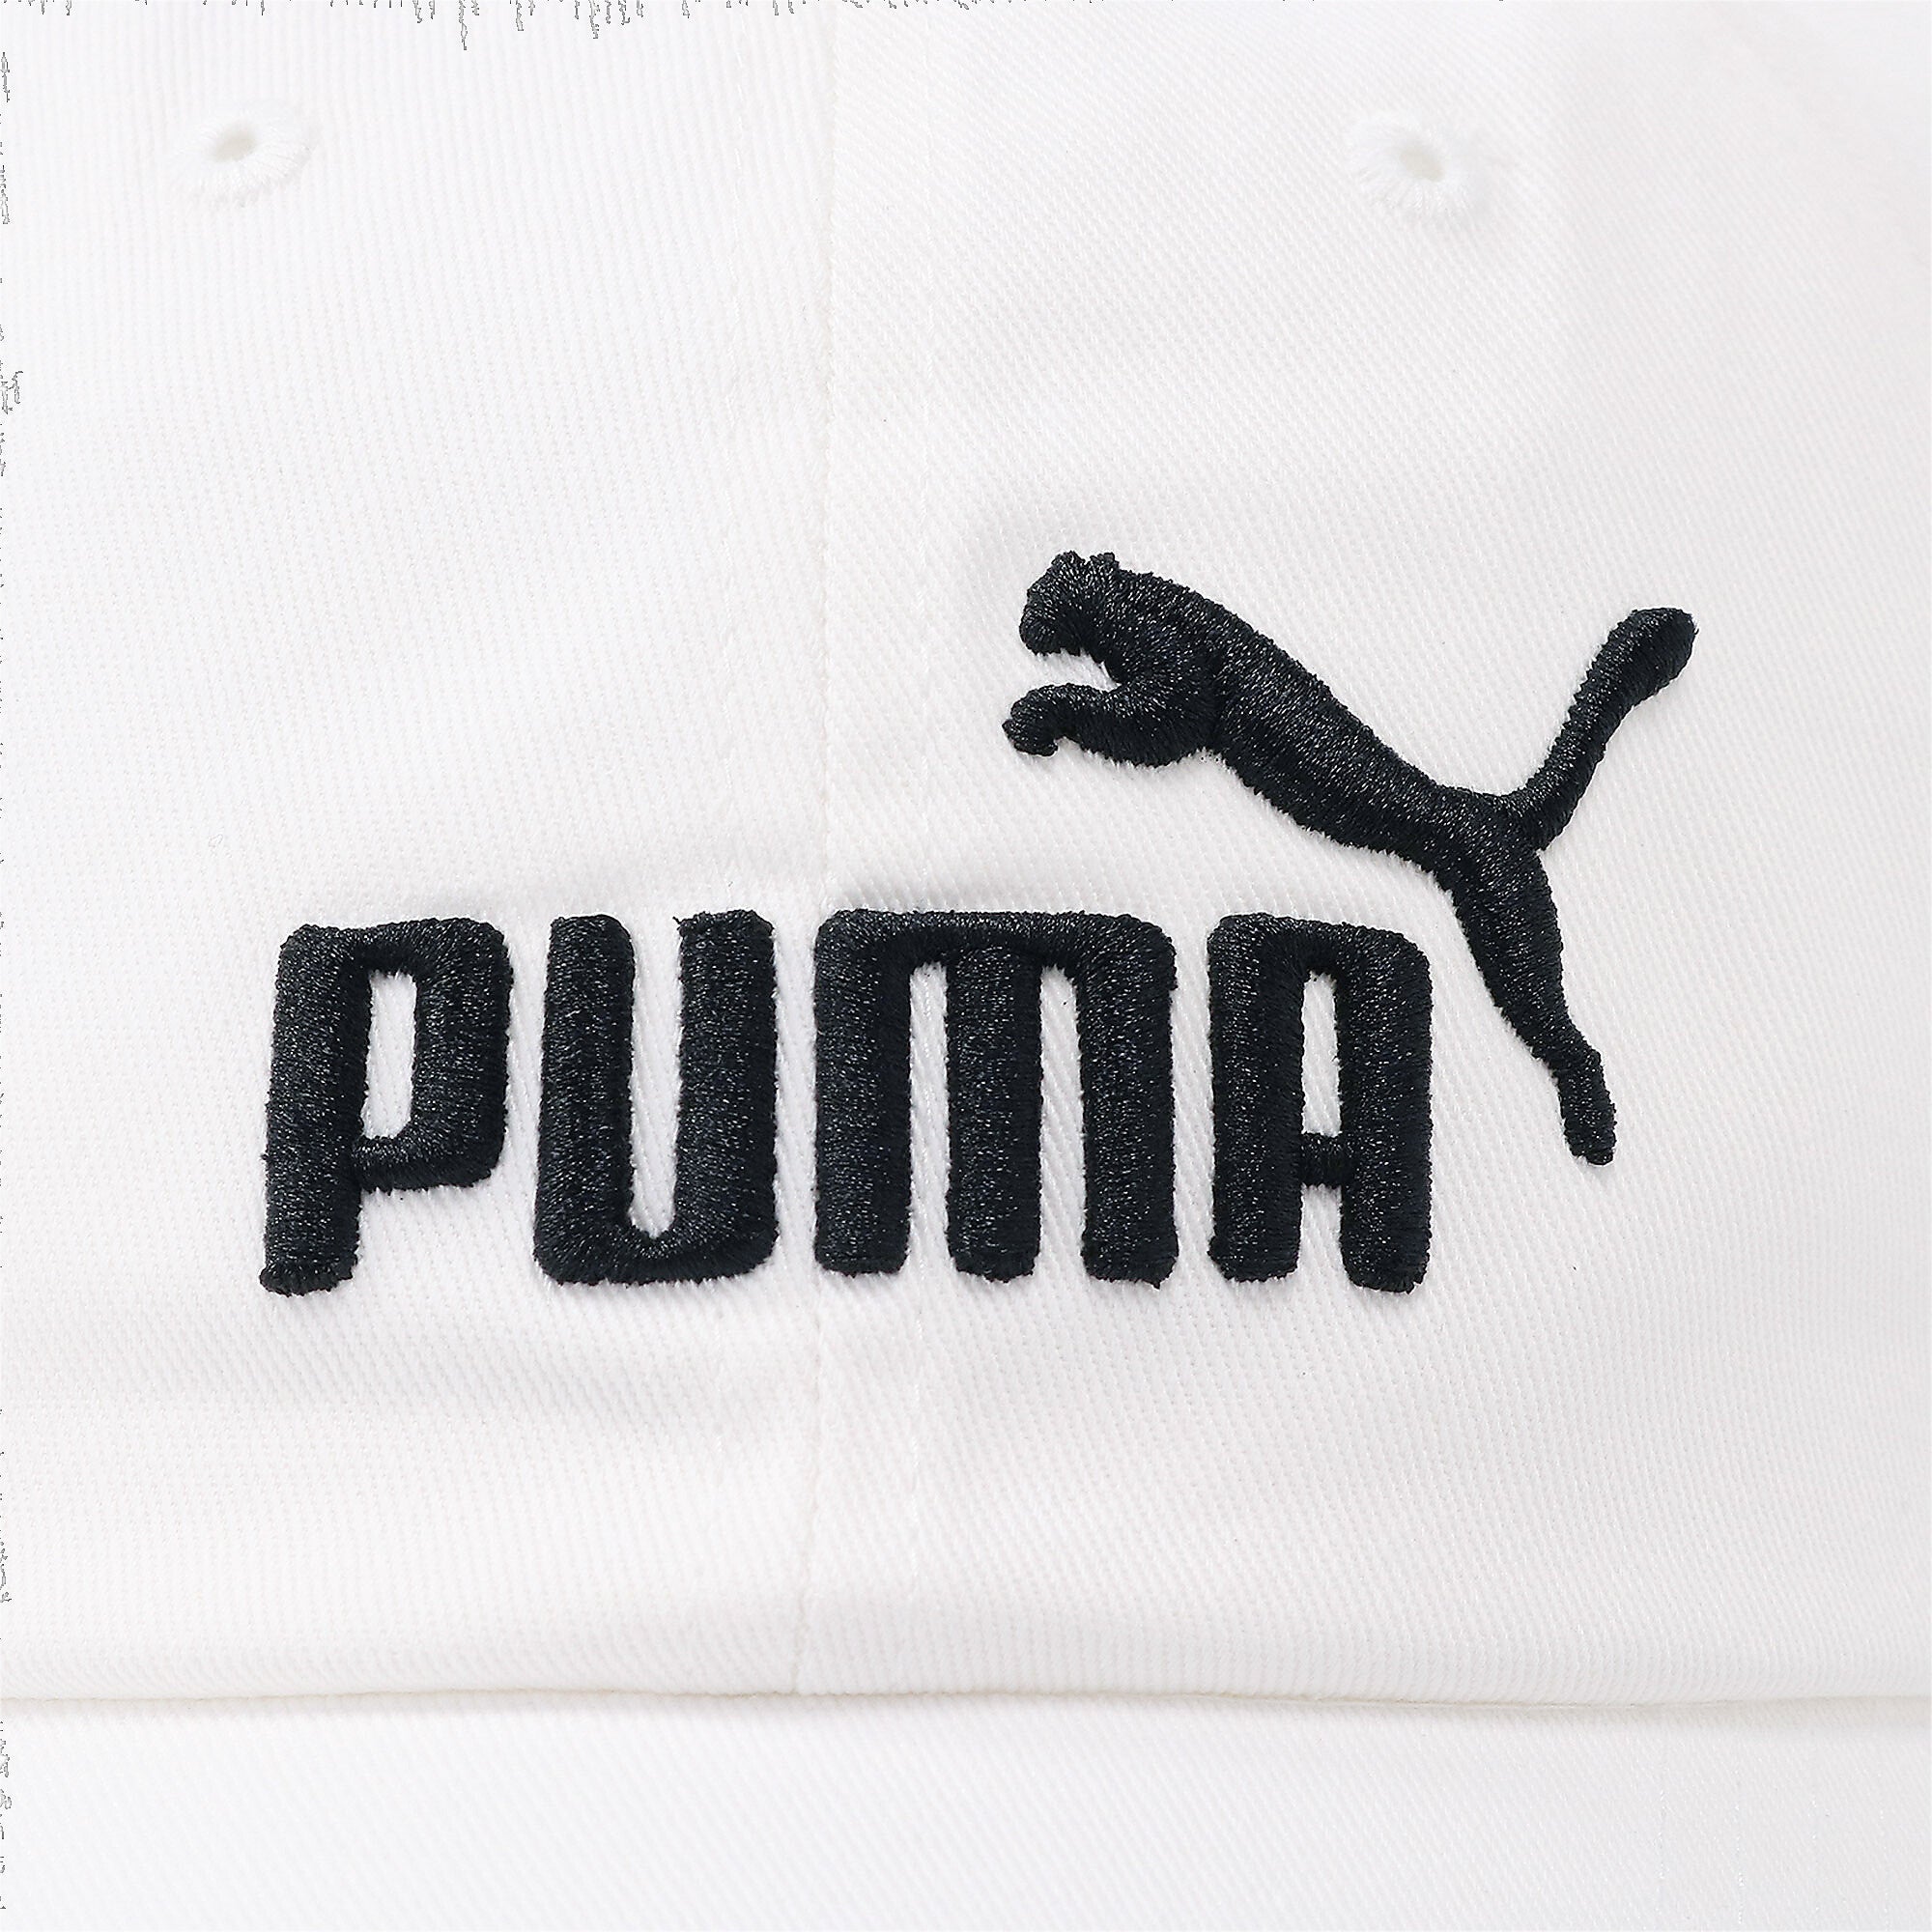 Puma Adults ESS Cap